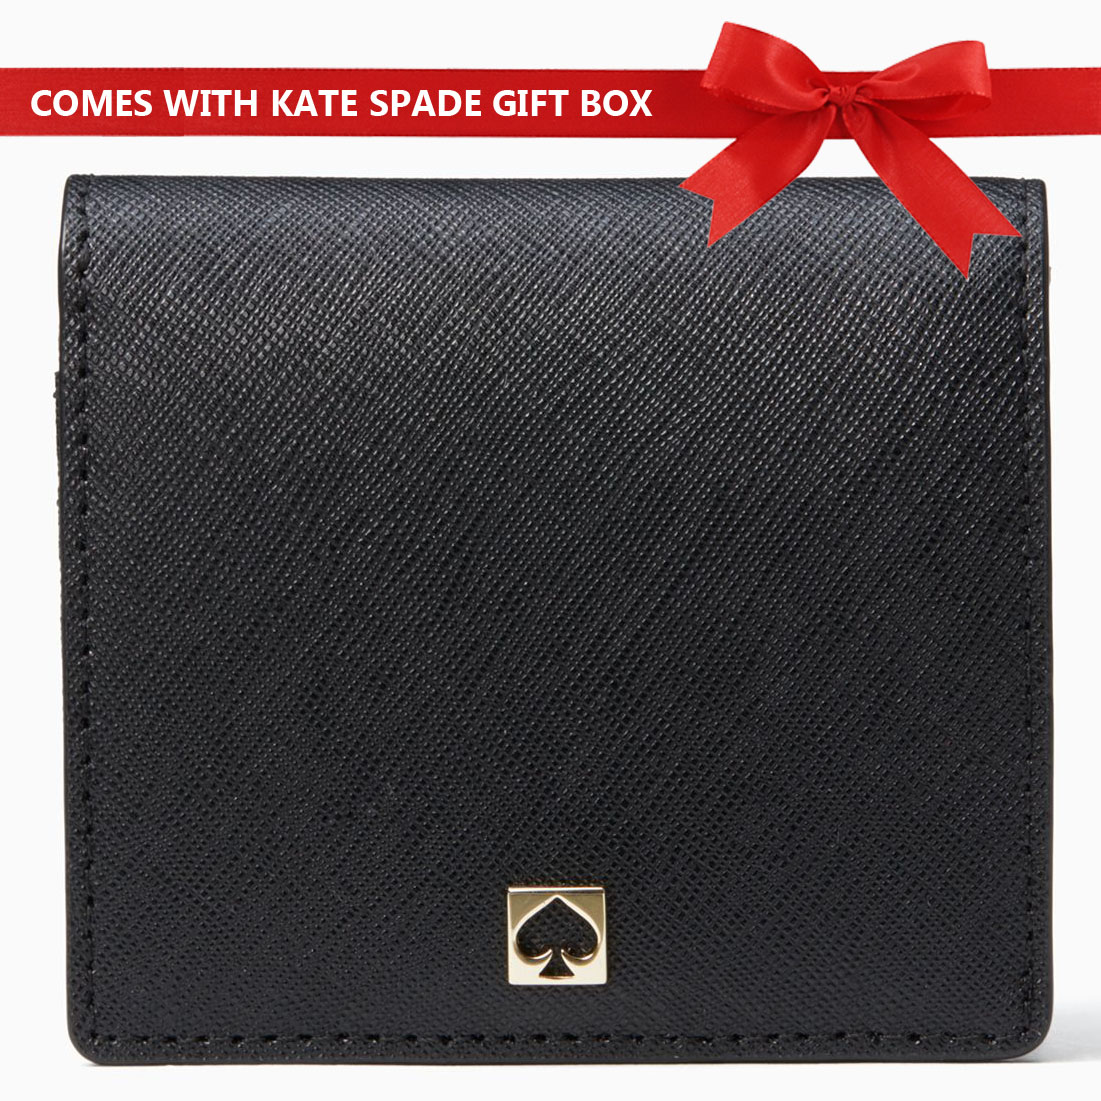 Kate Spade Wallet In Gift Box Cove Street Serenade Small Wallet Black # WLRU4958